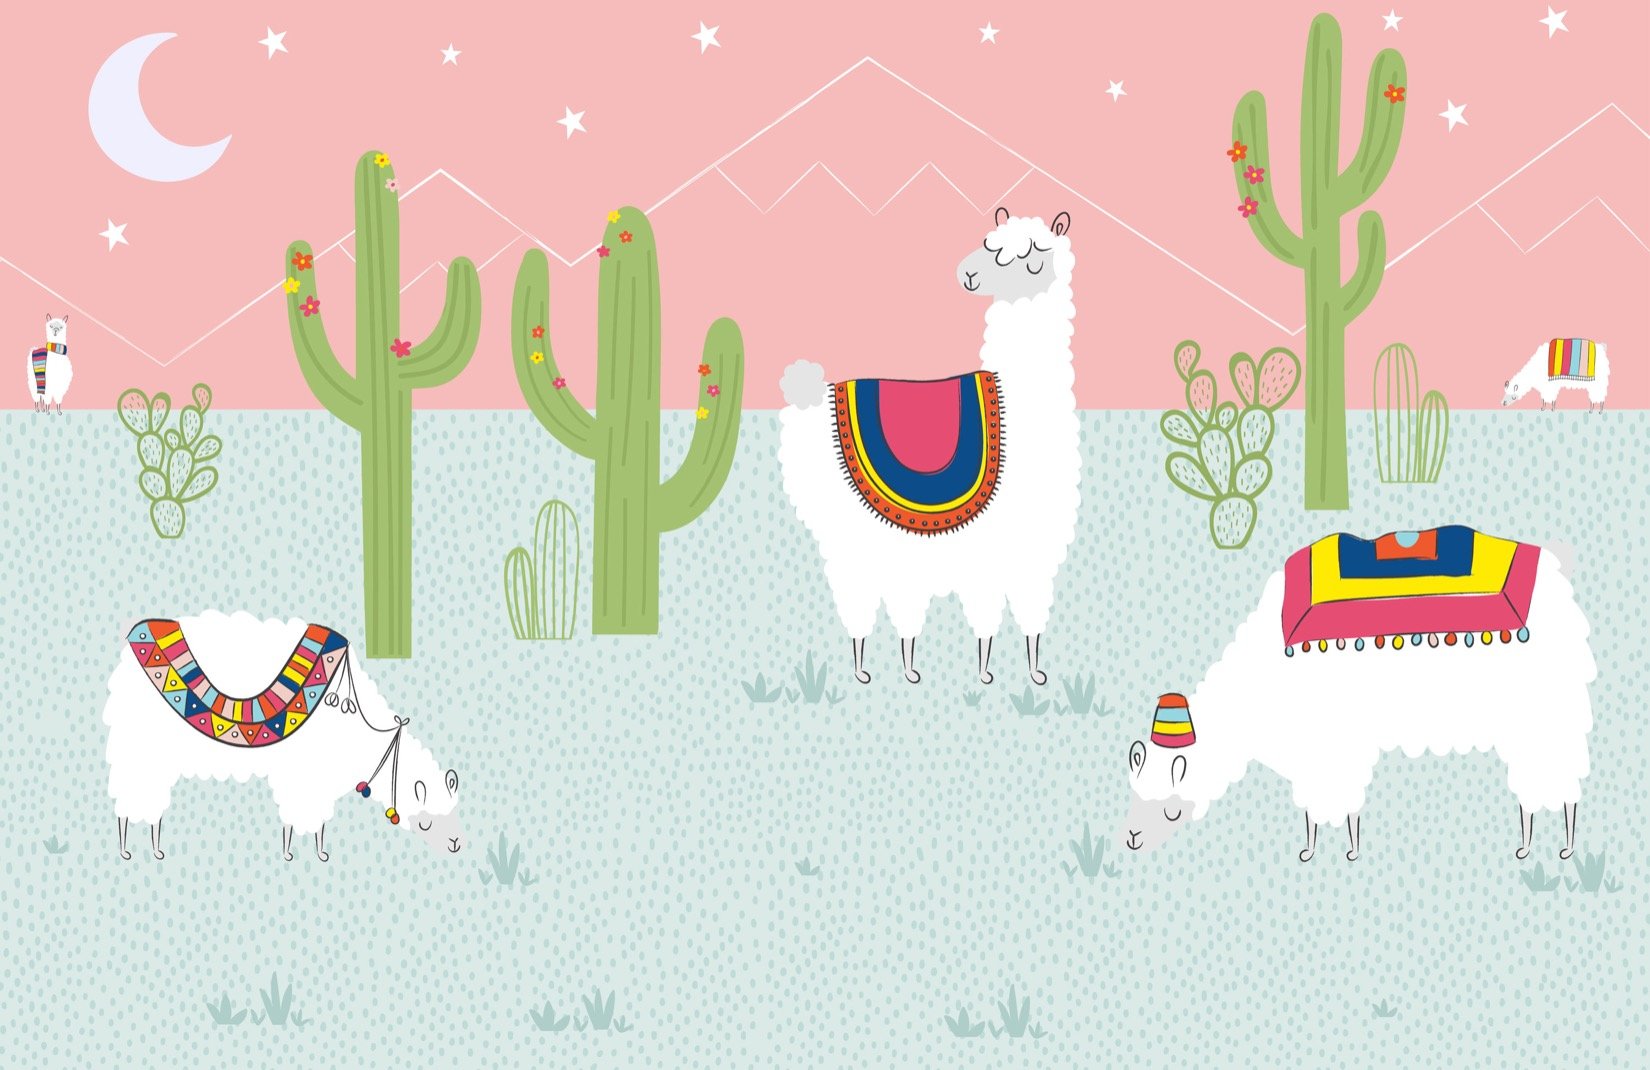 Cute Llamas wallpaper by Defaultyboi1617  Download on ZEDGE  3535